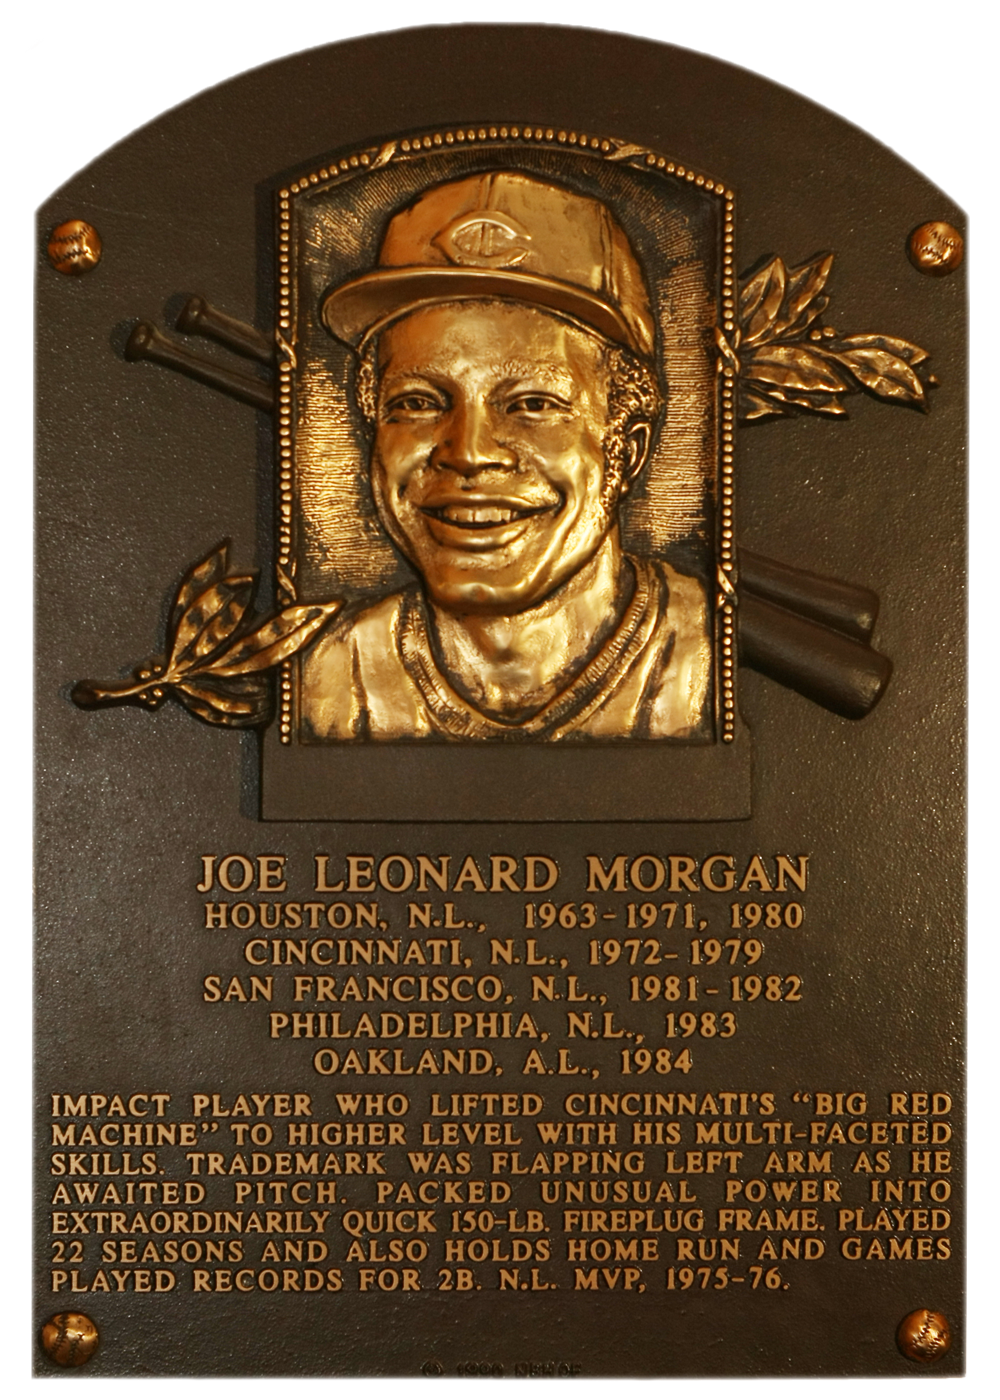 Joe Morgan Hall of Fame plaque